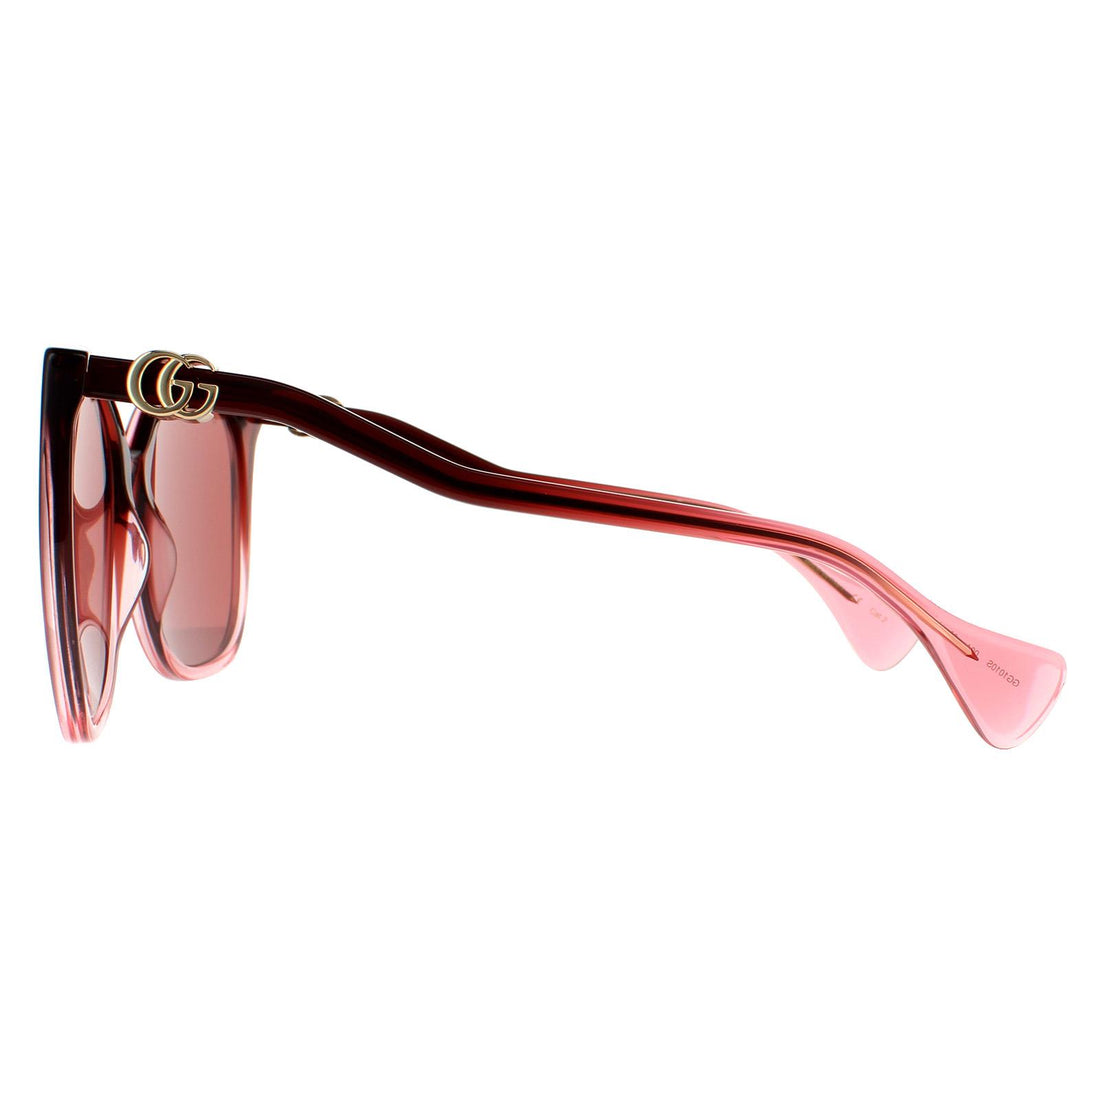 Gucci Sunglasses GG1010S 004 Burgundy Red